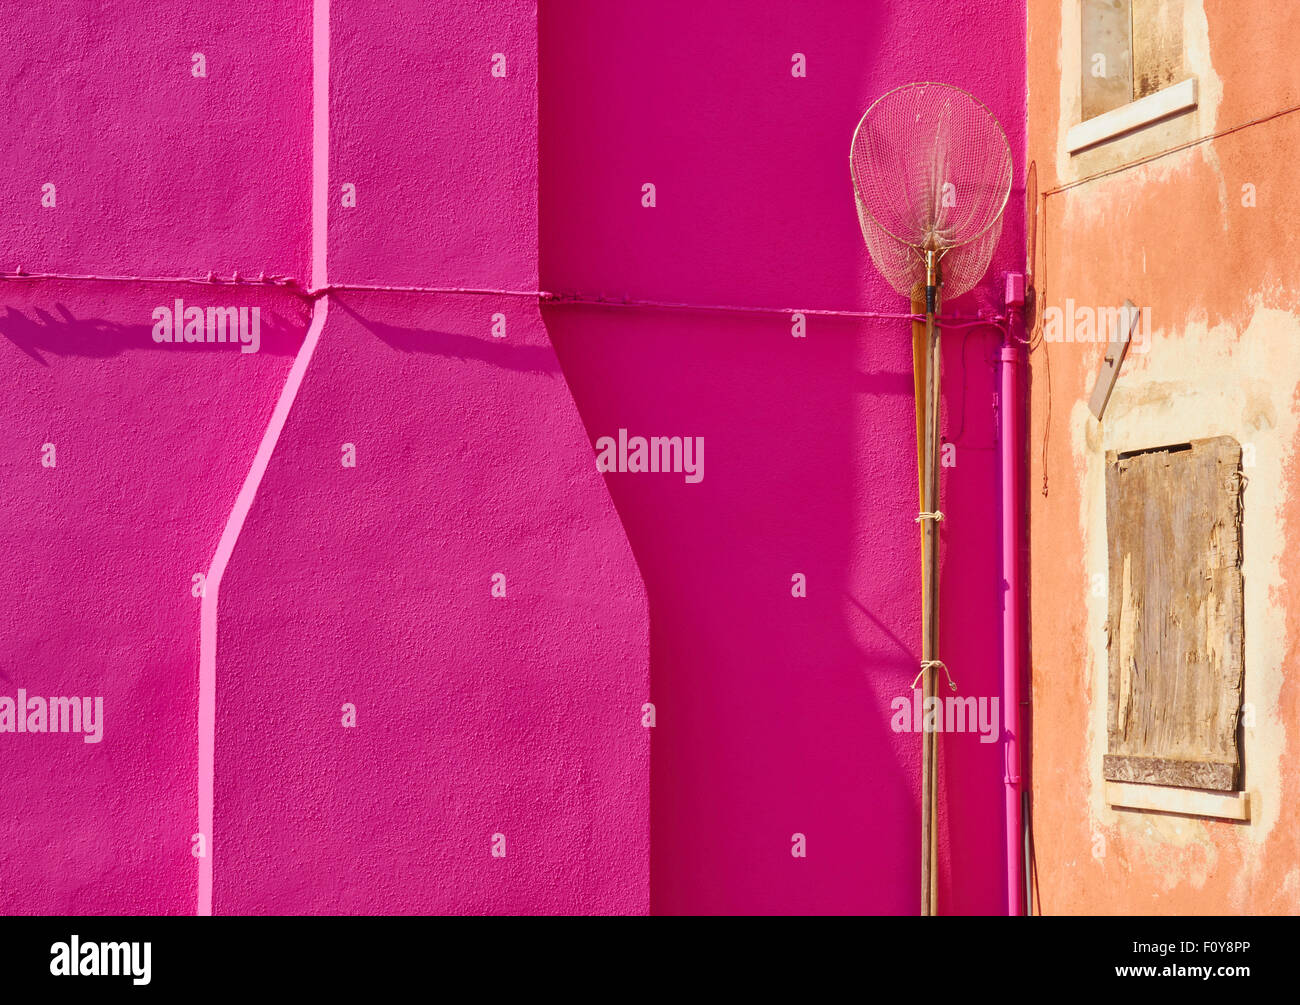 Fishing net against bright pink wall next to boarded up house Burano  Venetian Lagoon Veneto Italy Europe Stock Photo - Alamy